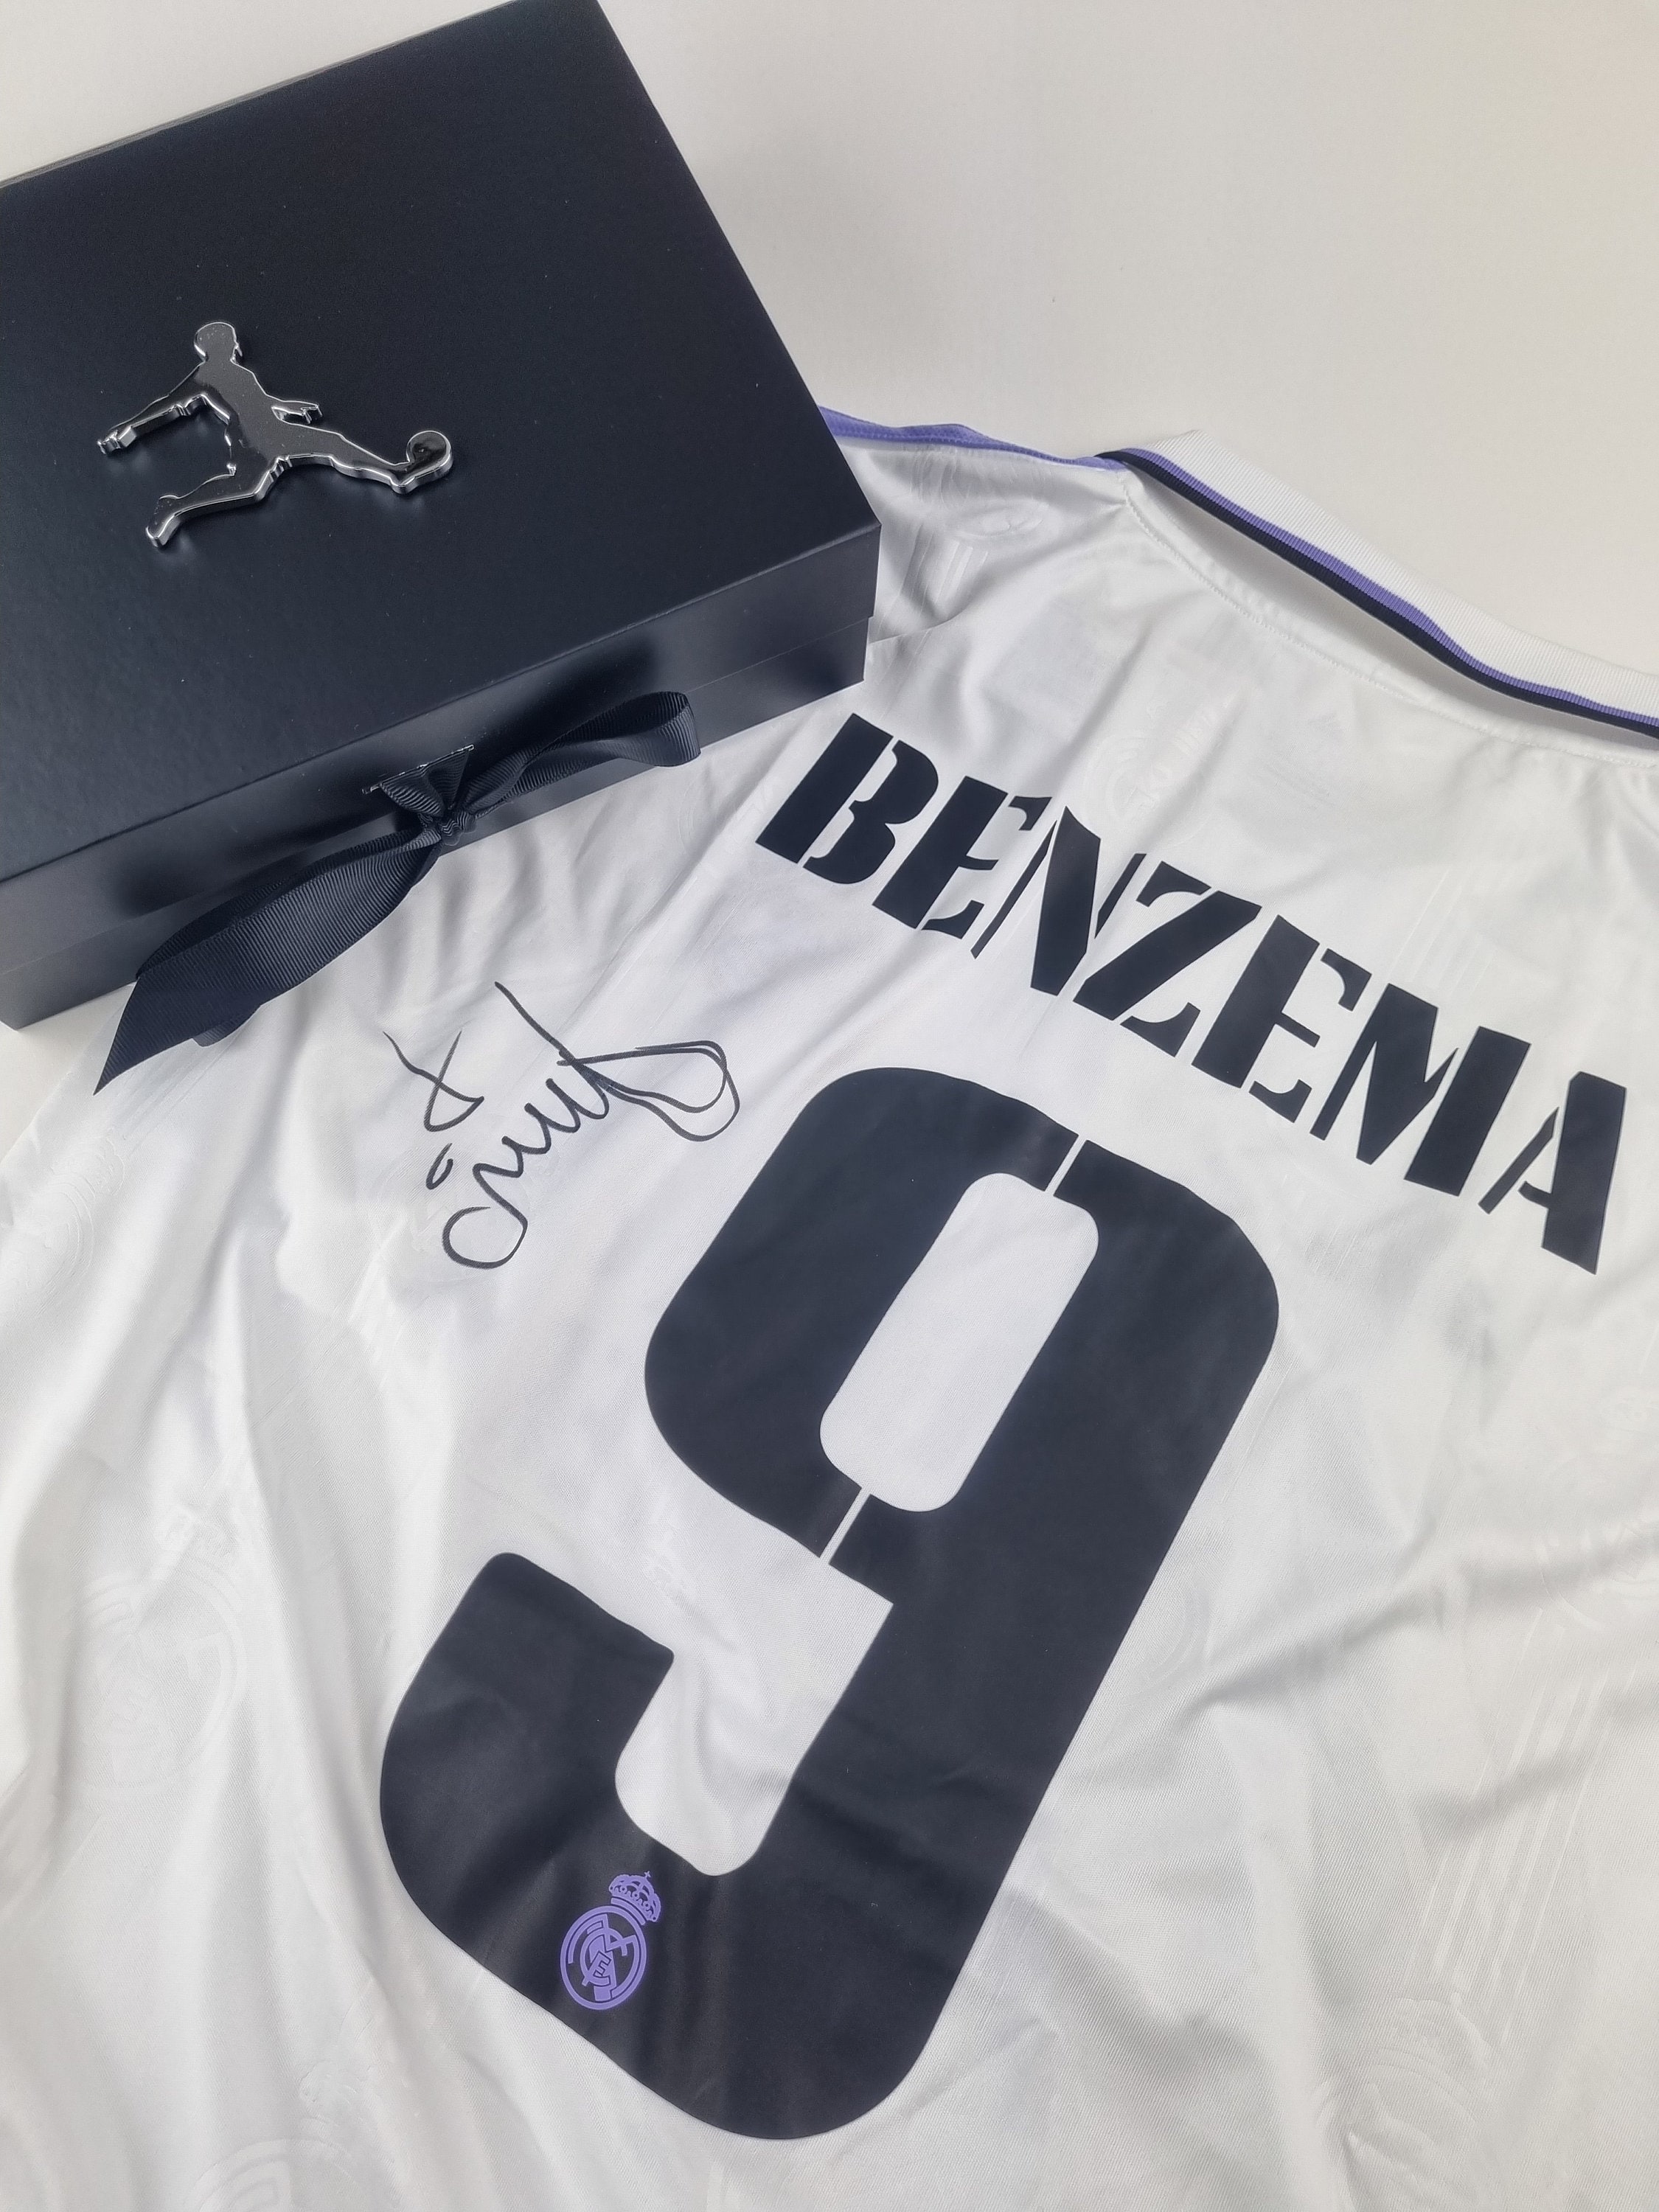 benzema signed shirt